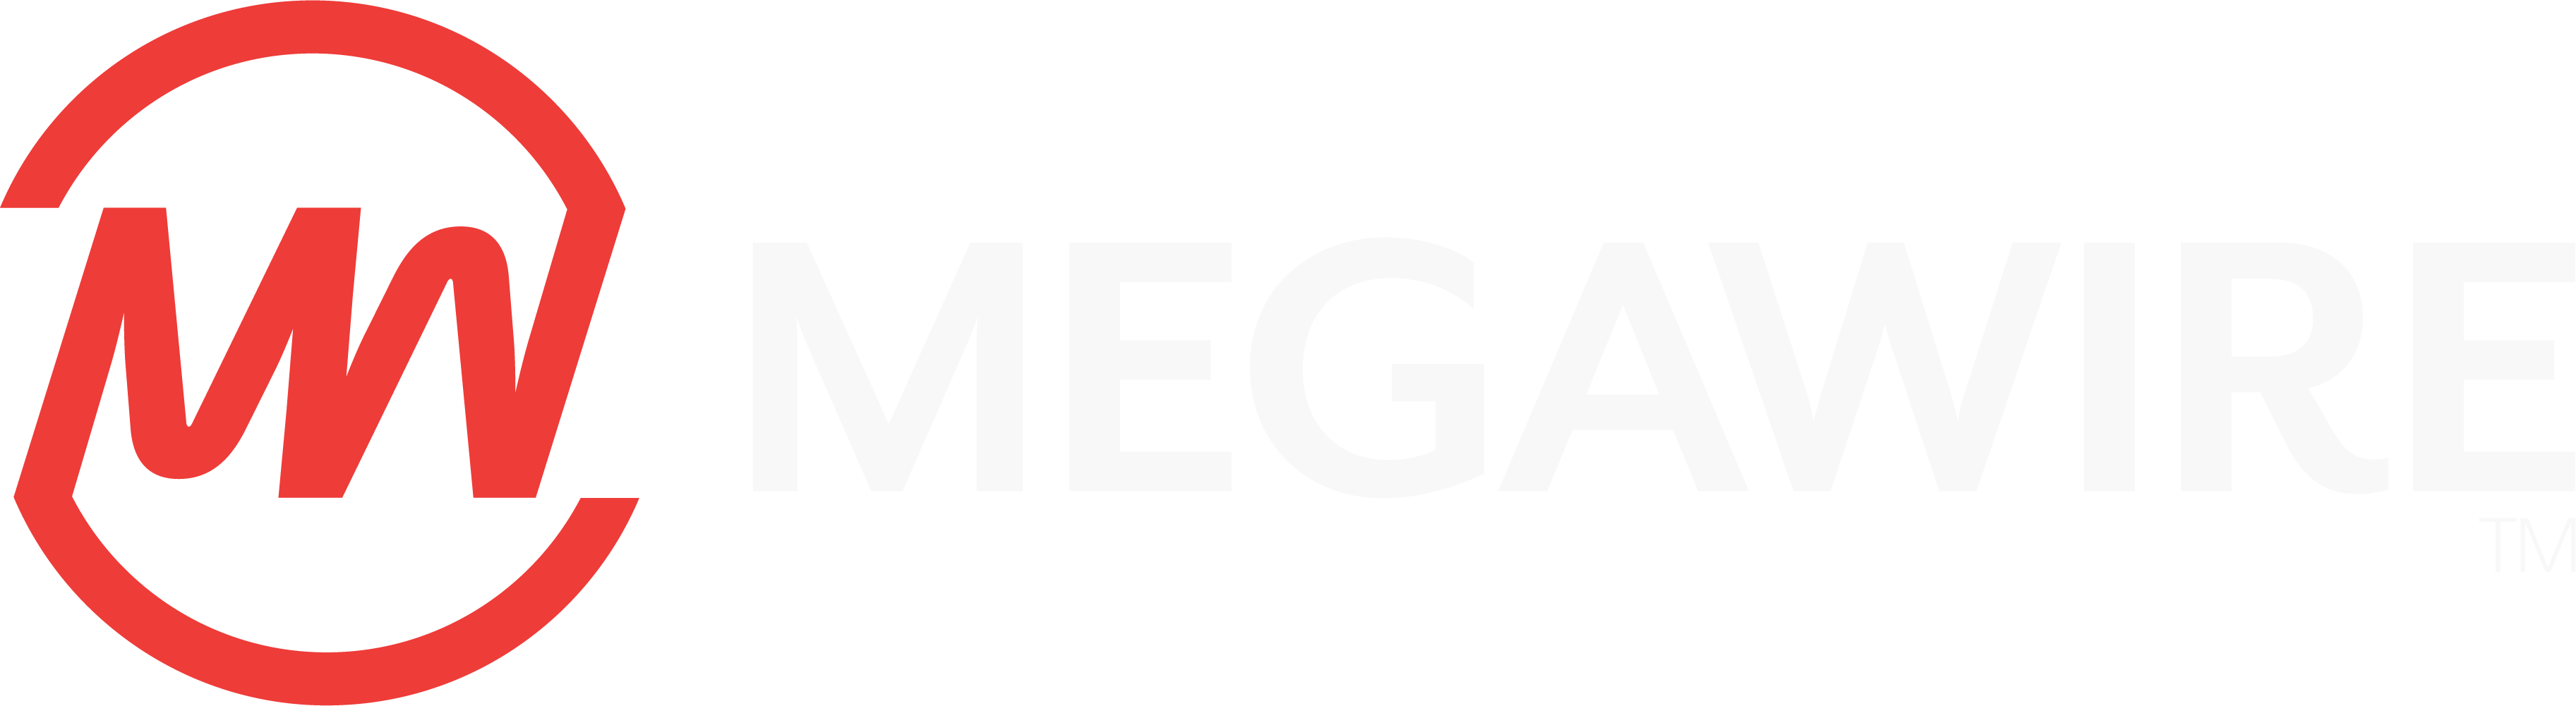 Megawire Inc.